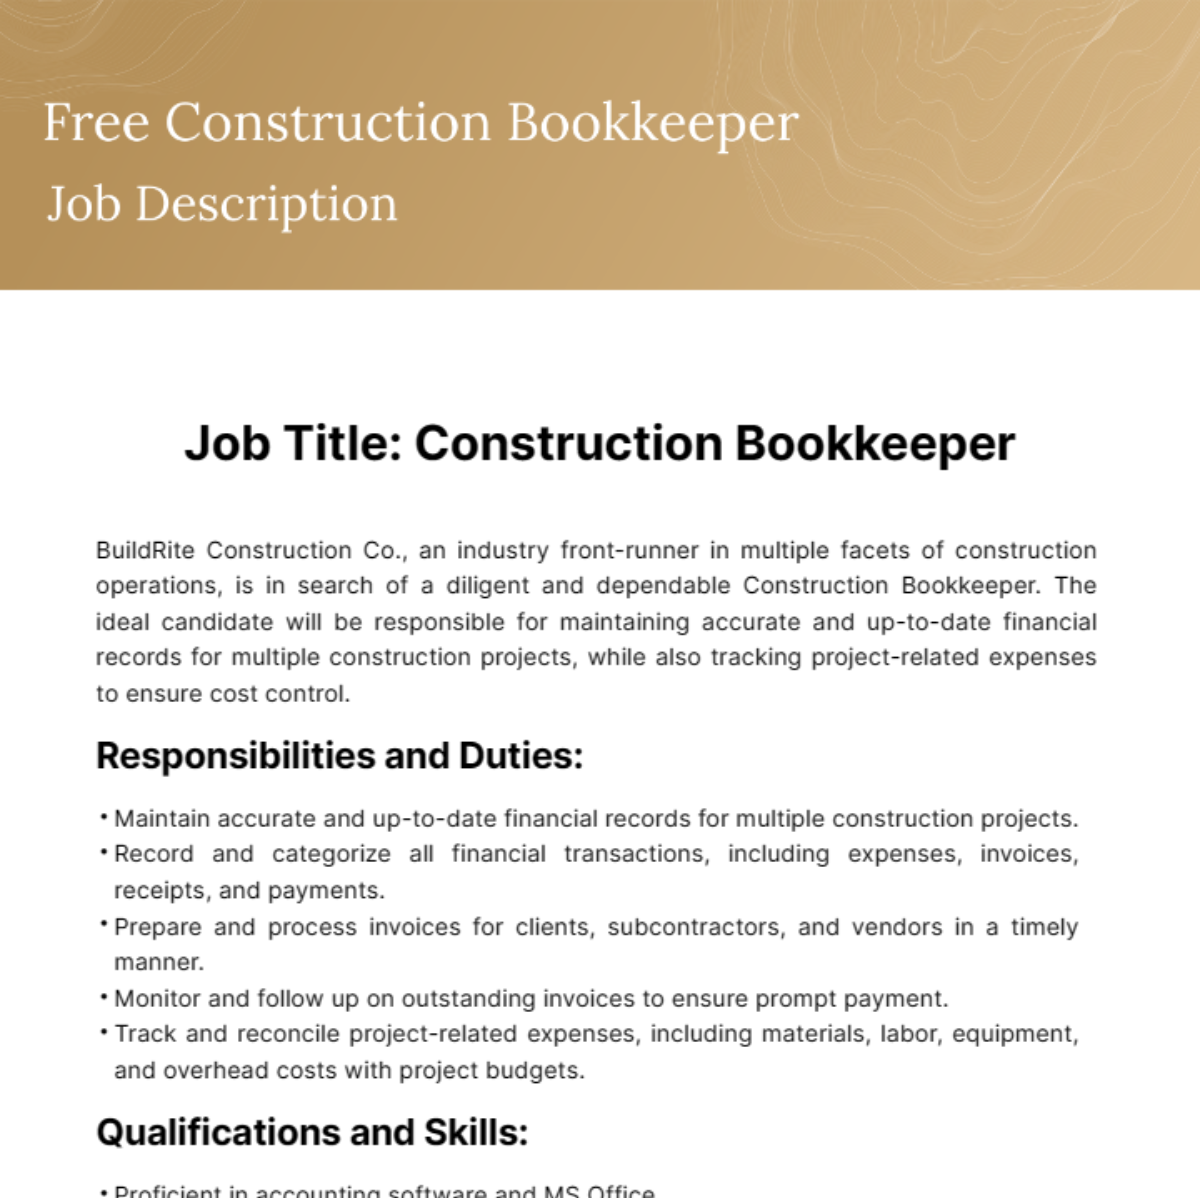 Free Construction Bookkeeper Job Description Template